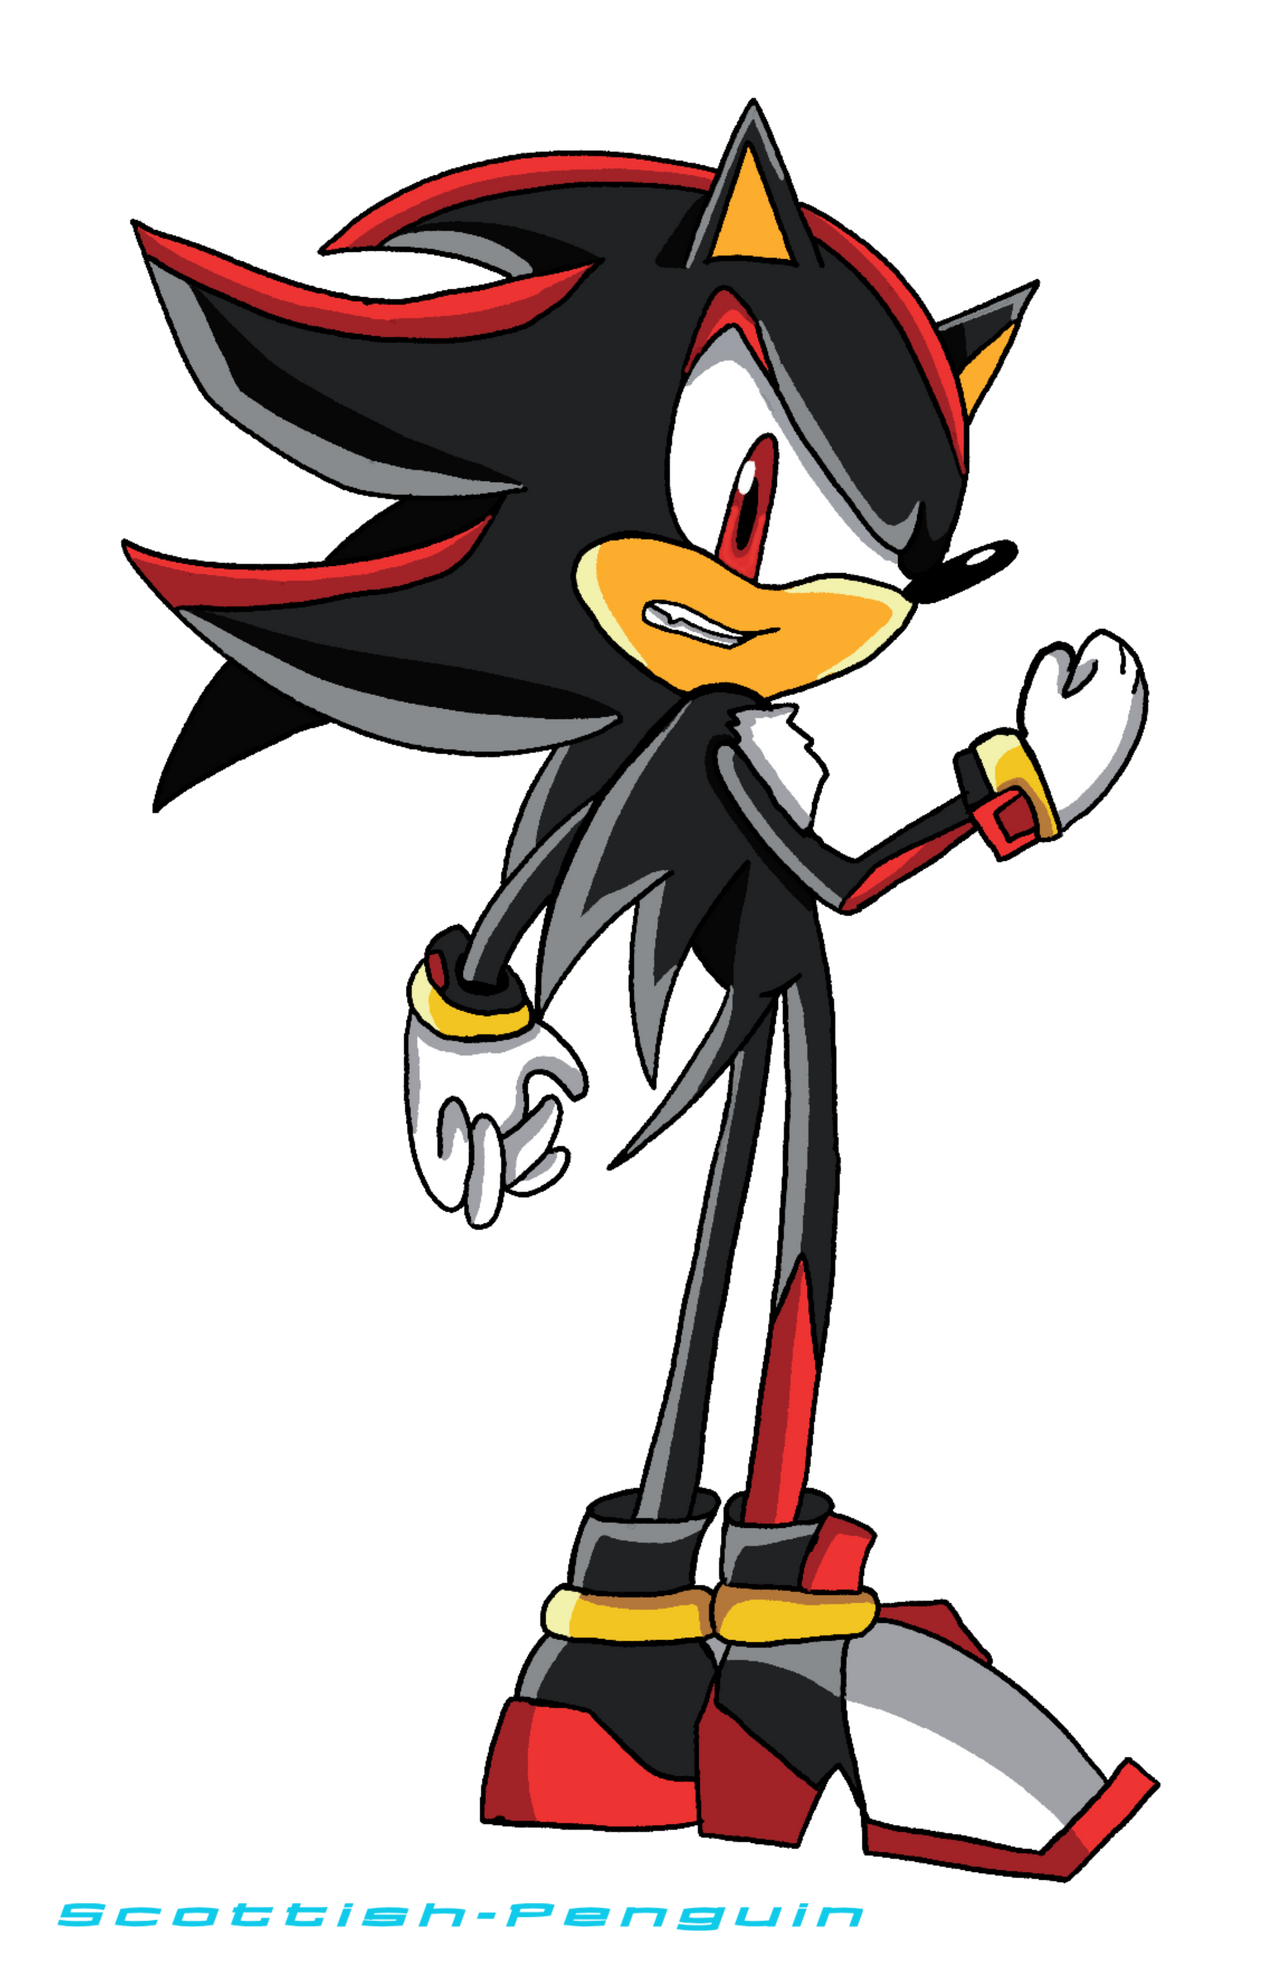 Shadow the Hedgehog, Sonic X Wikia